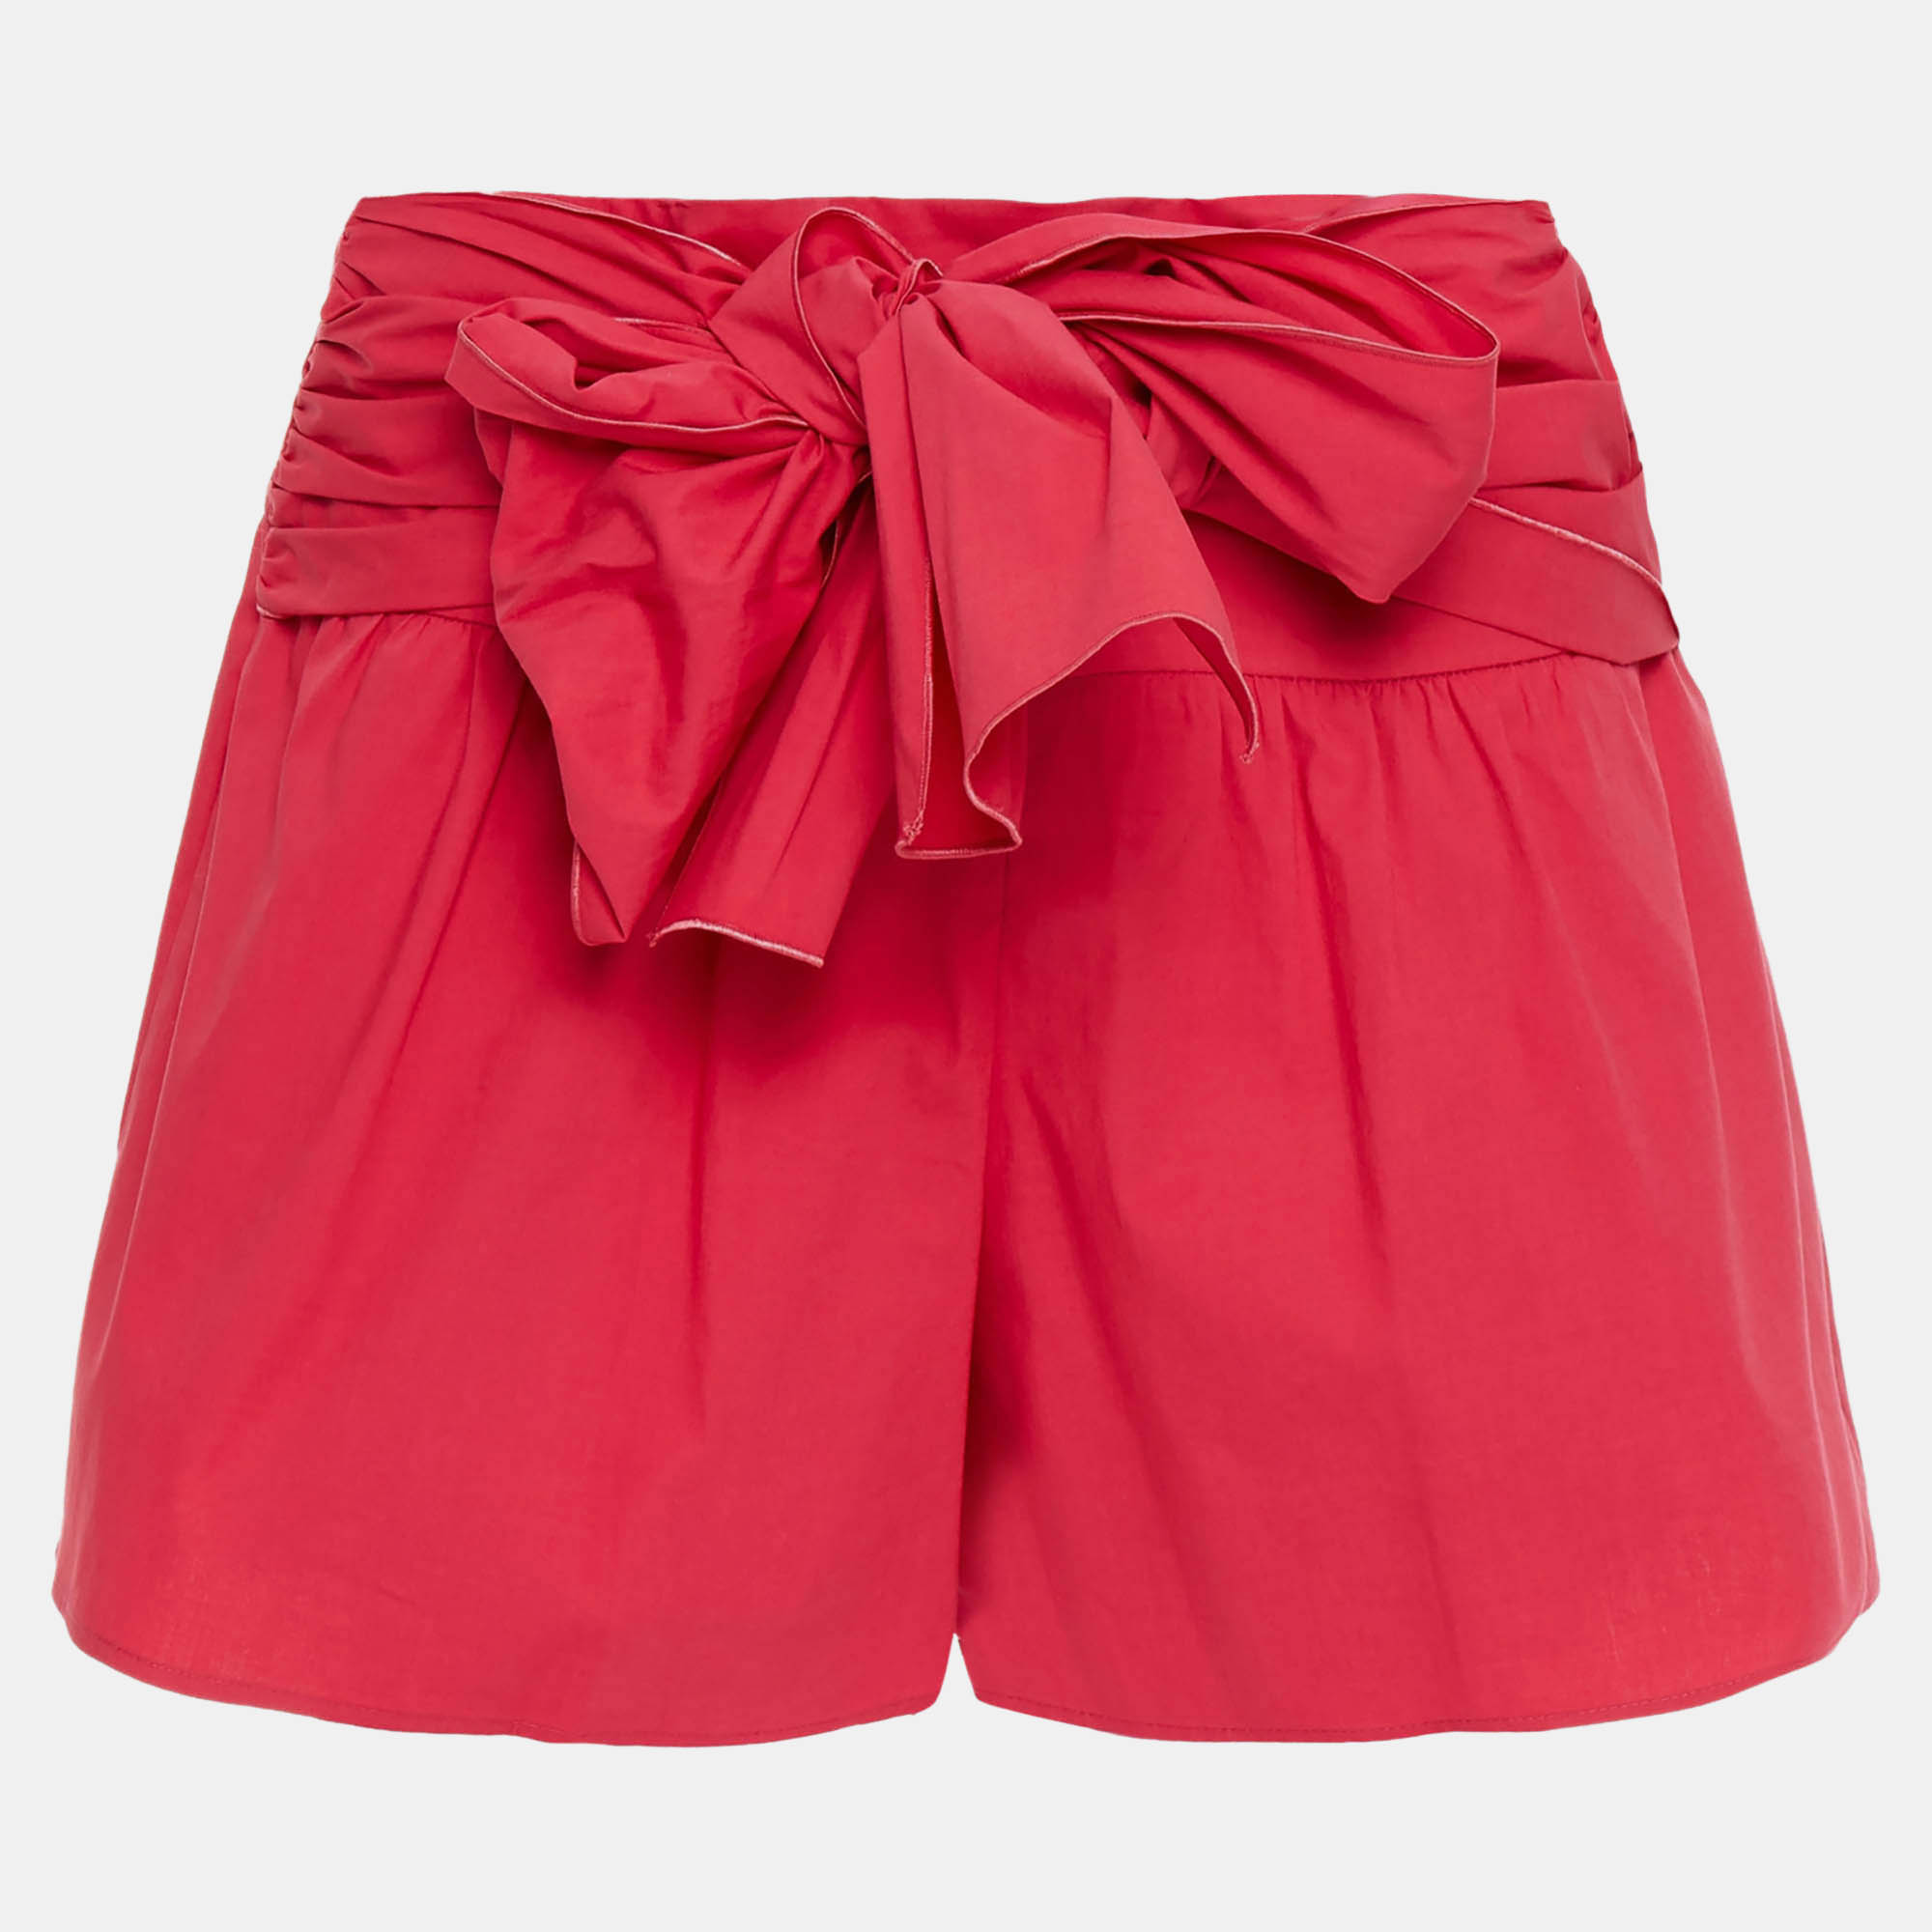 Red valentino cotton shorts 38